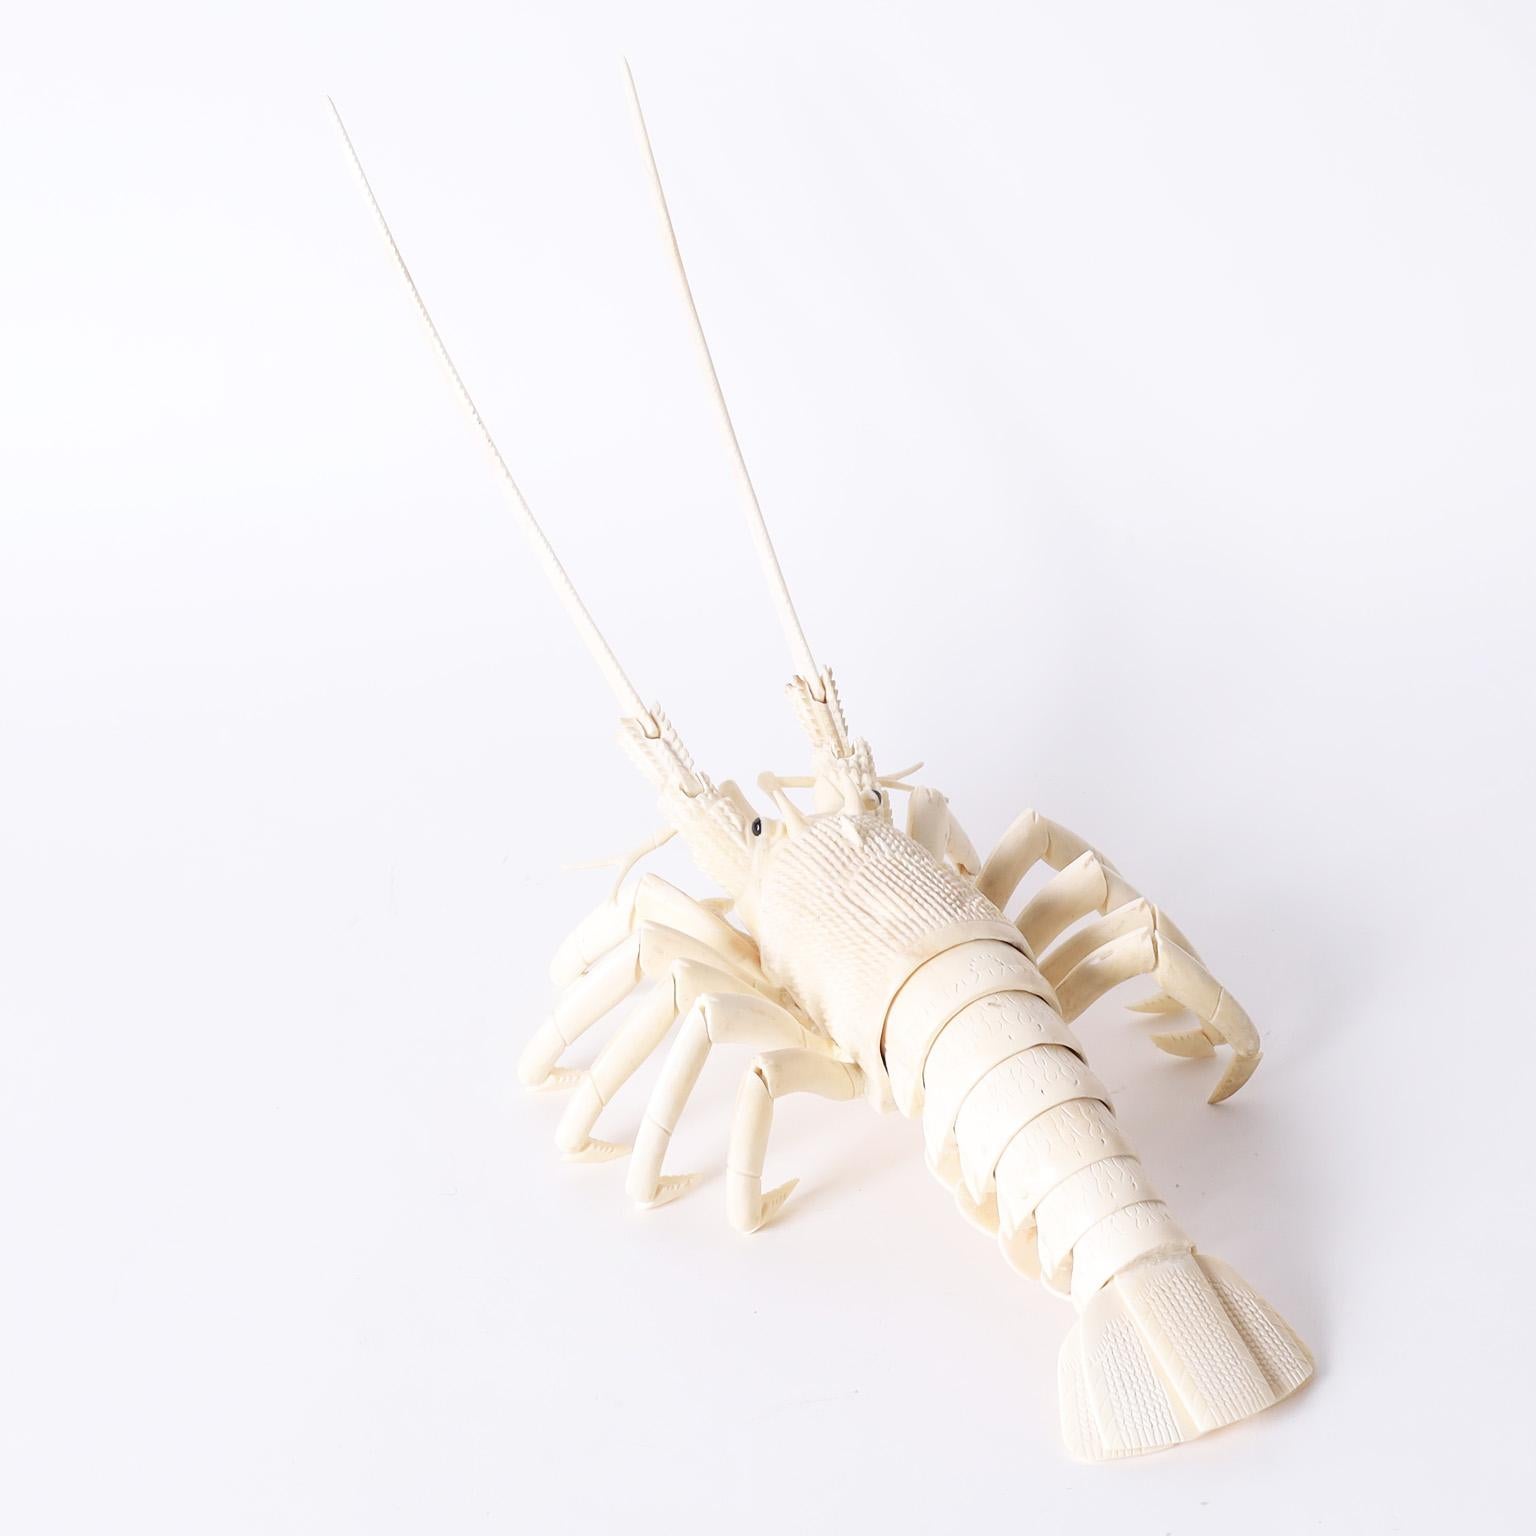 Large Bone Articulated Lobster Sculpture For Sale 1